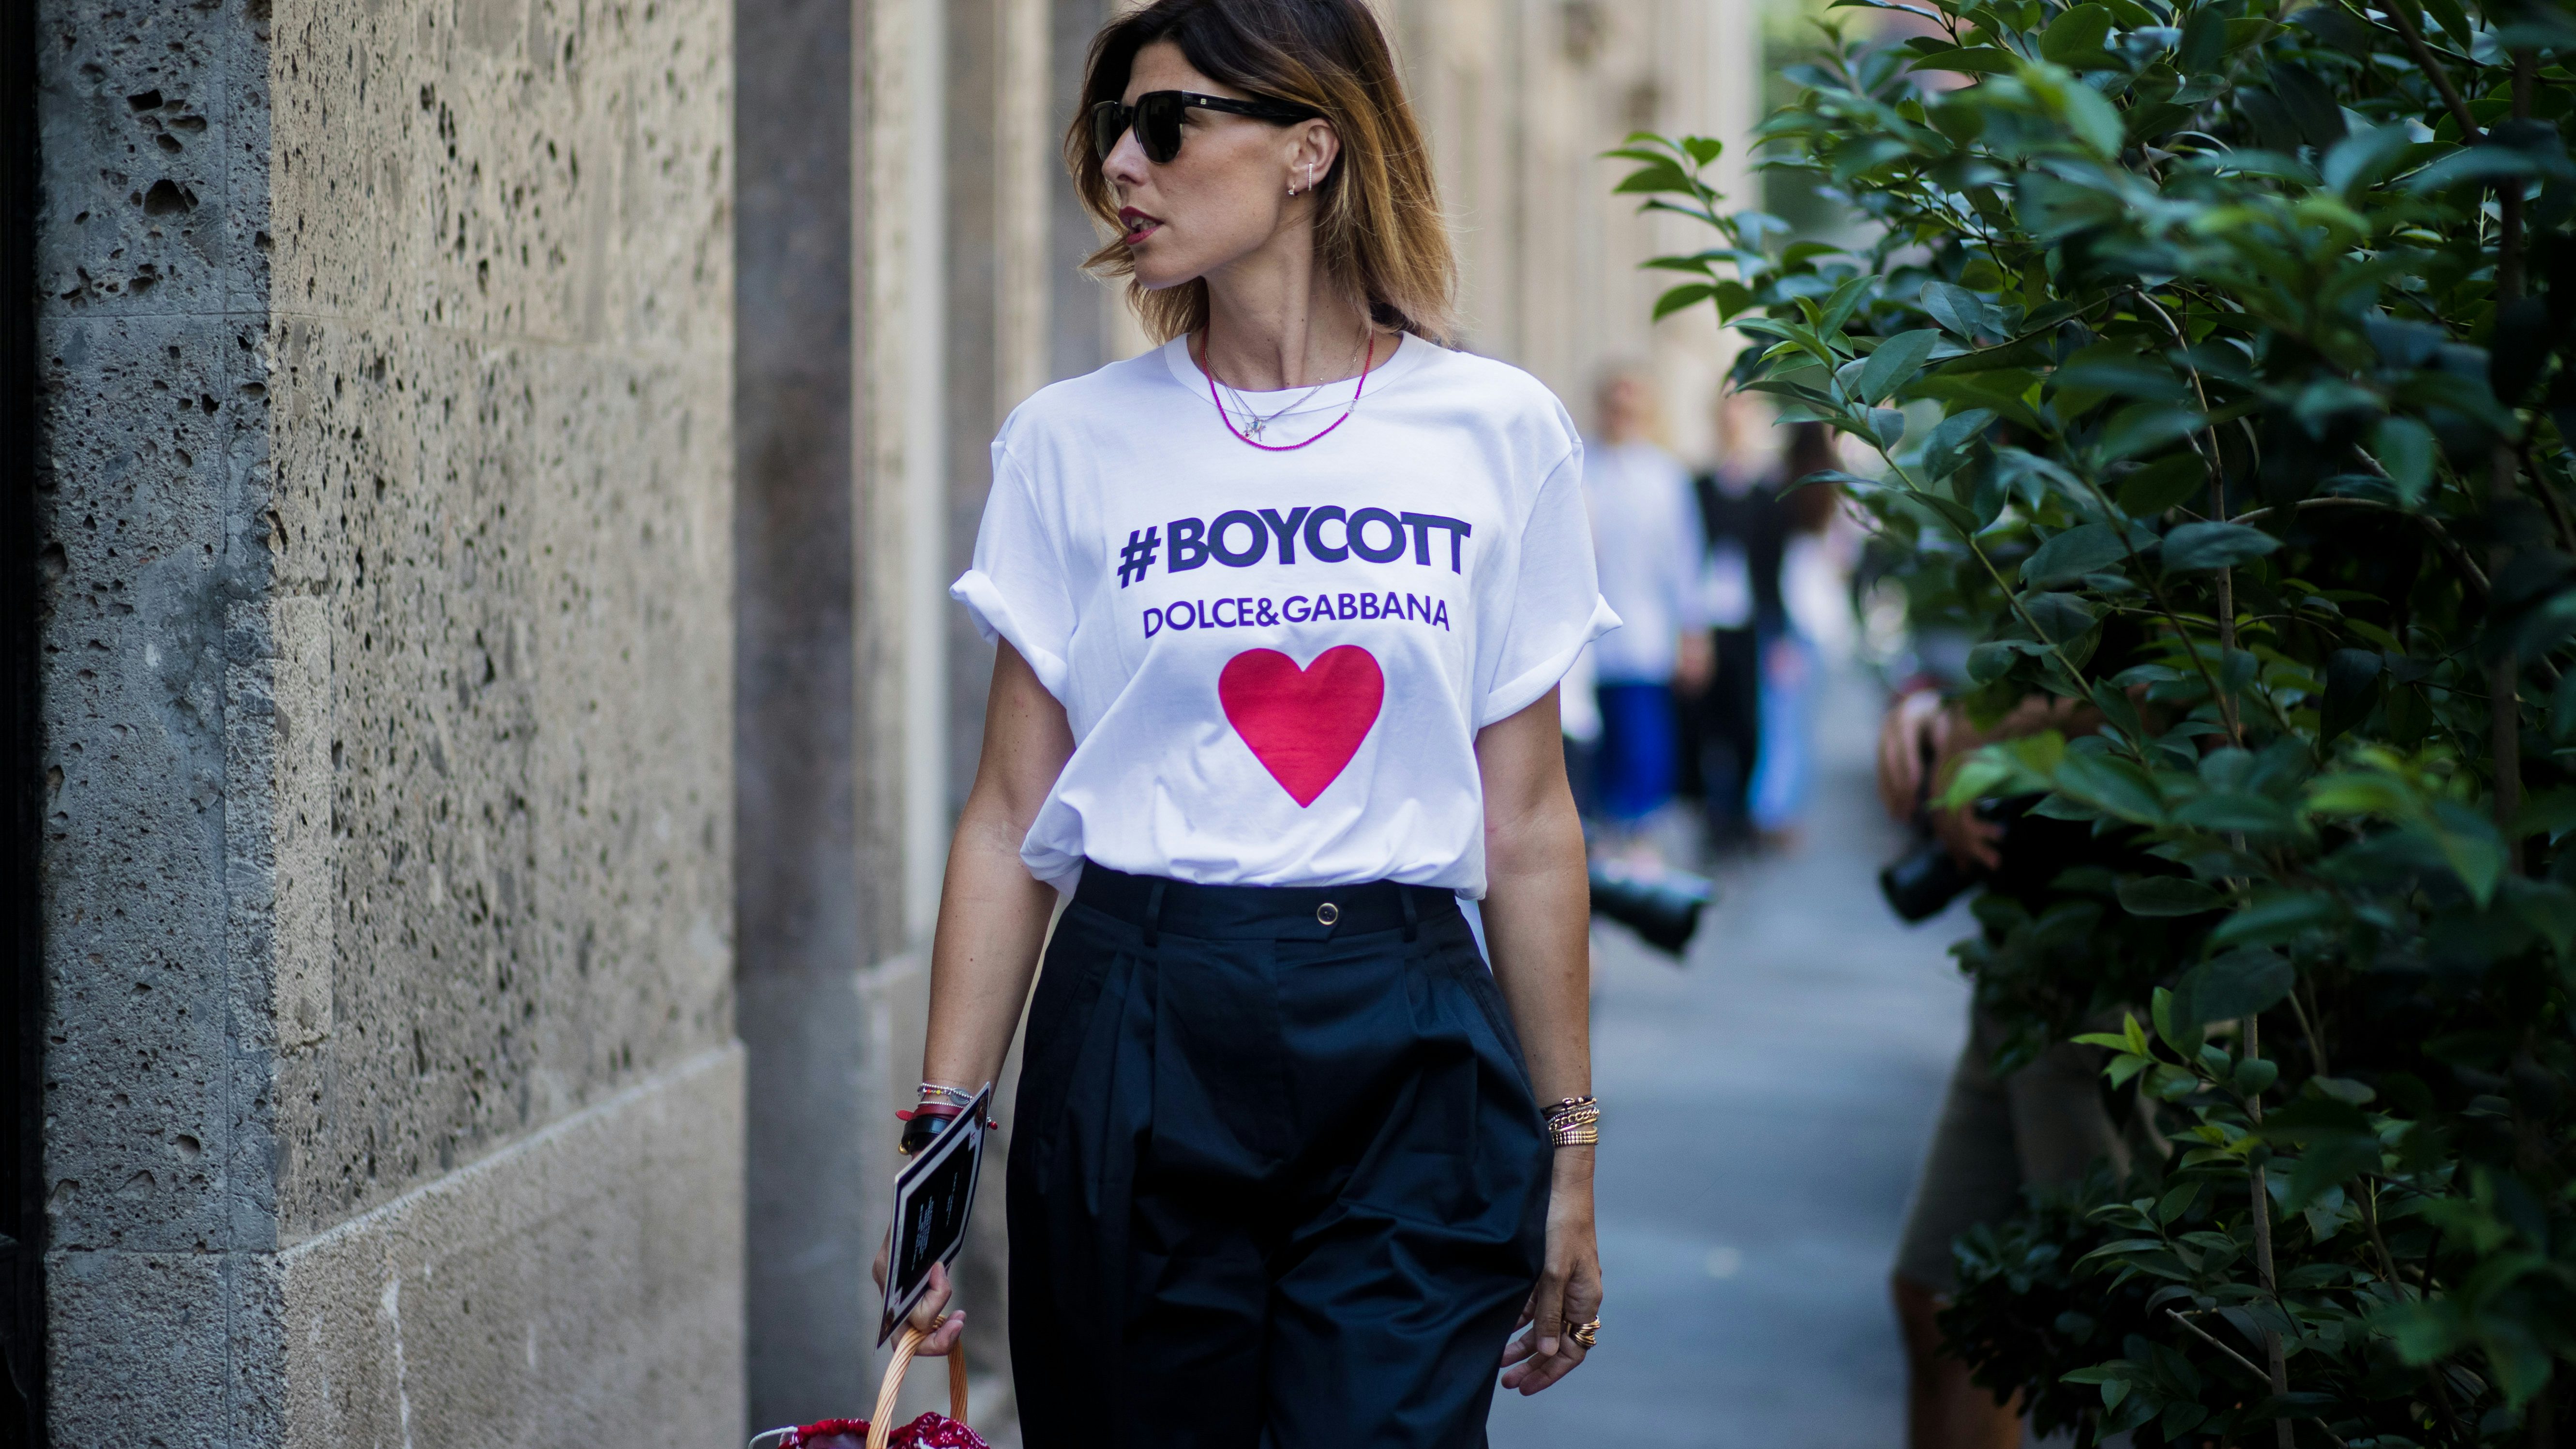 boycott dolce and gabbana t shirt